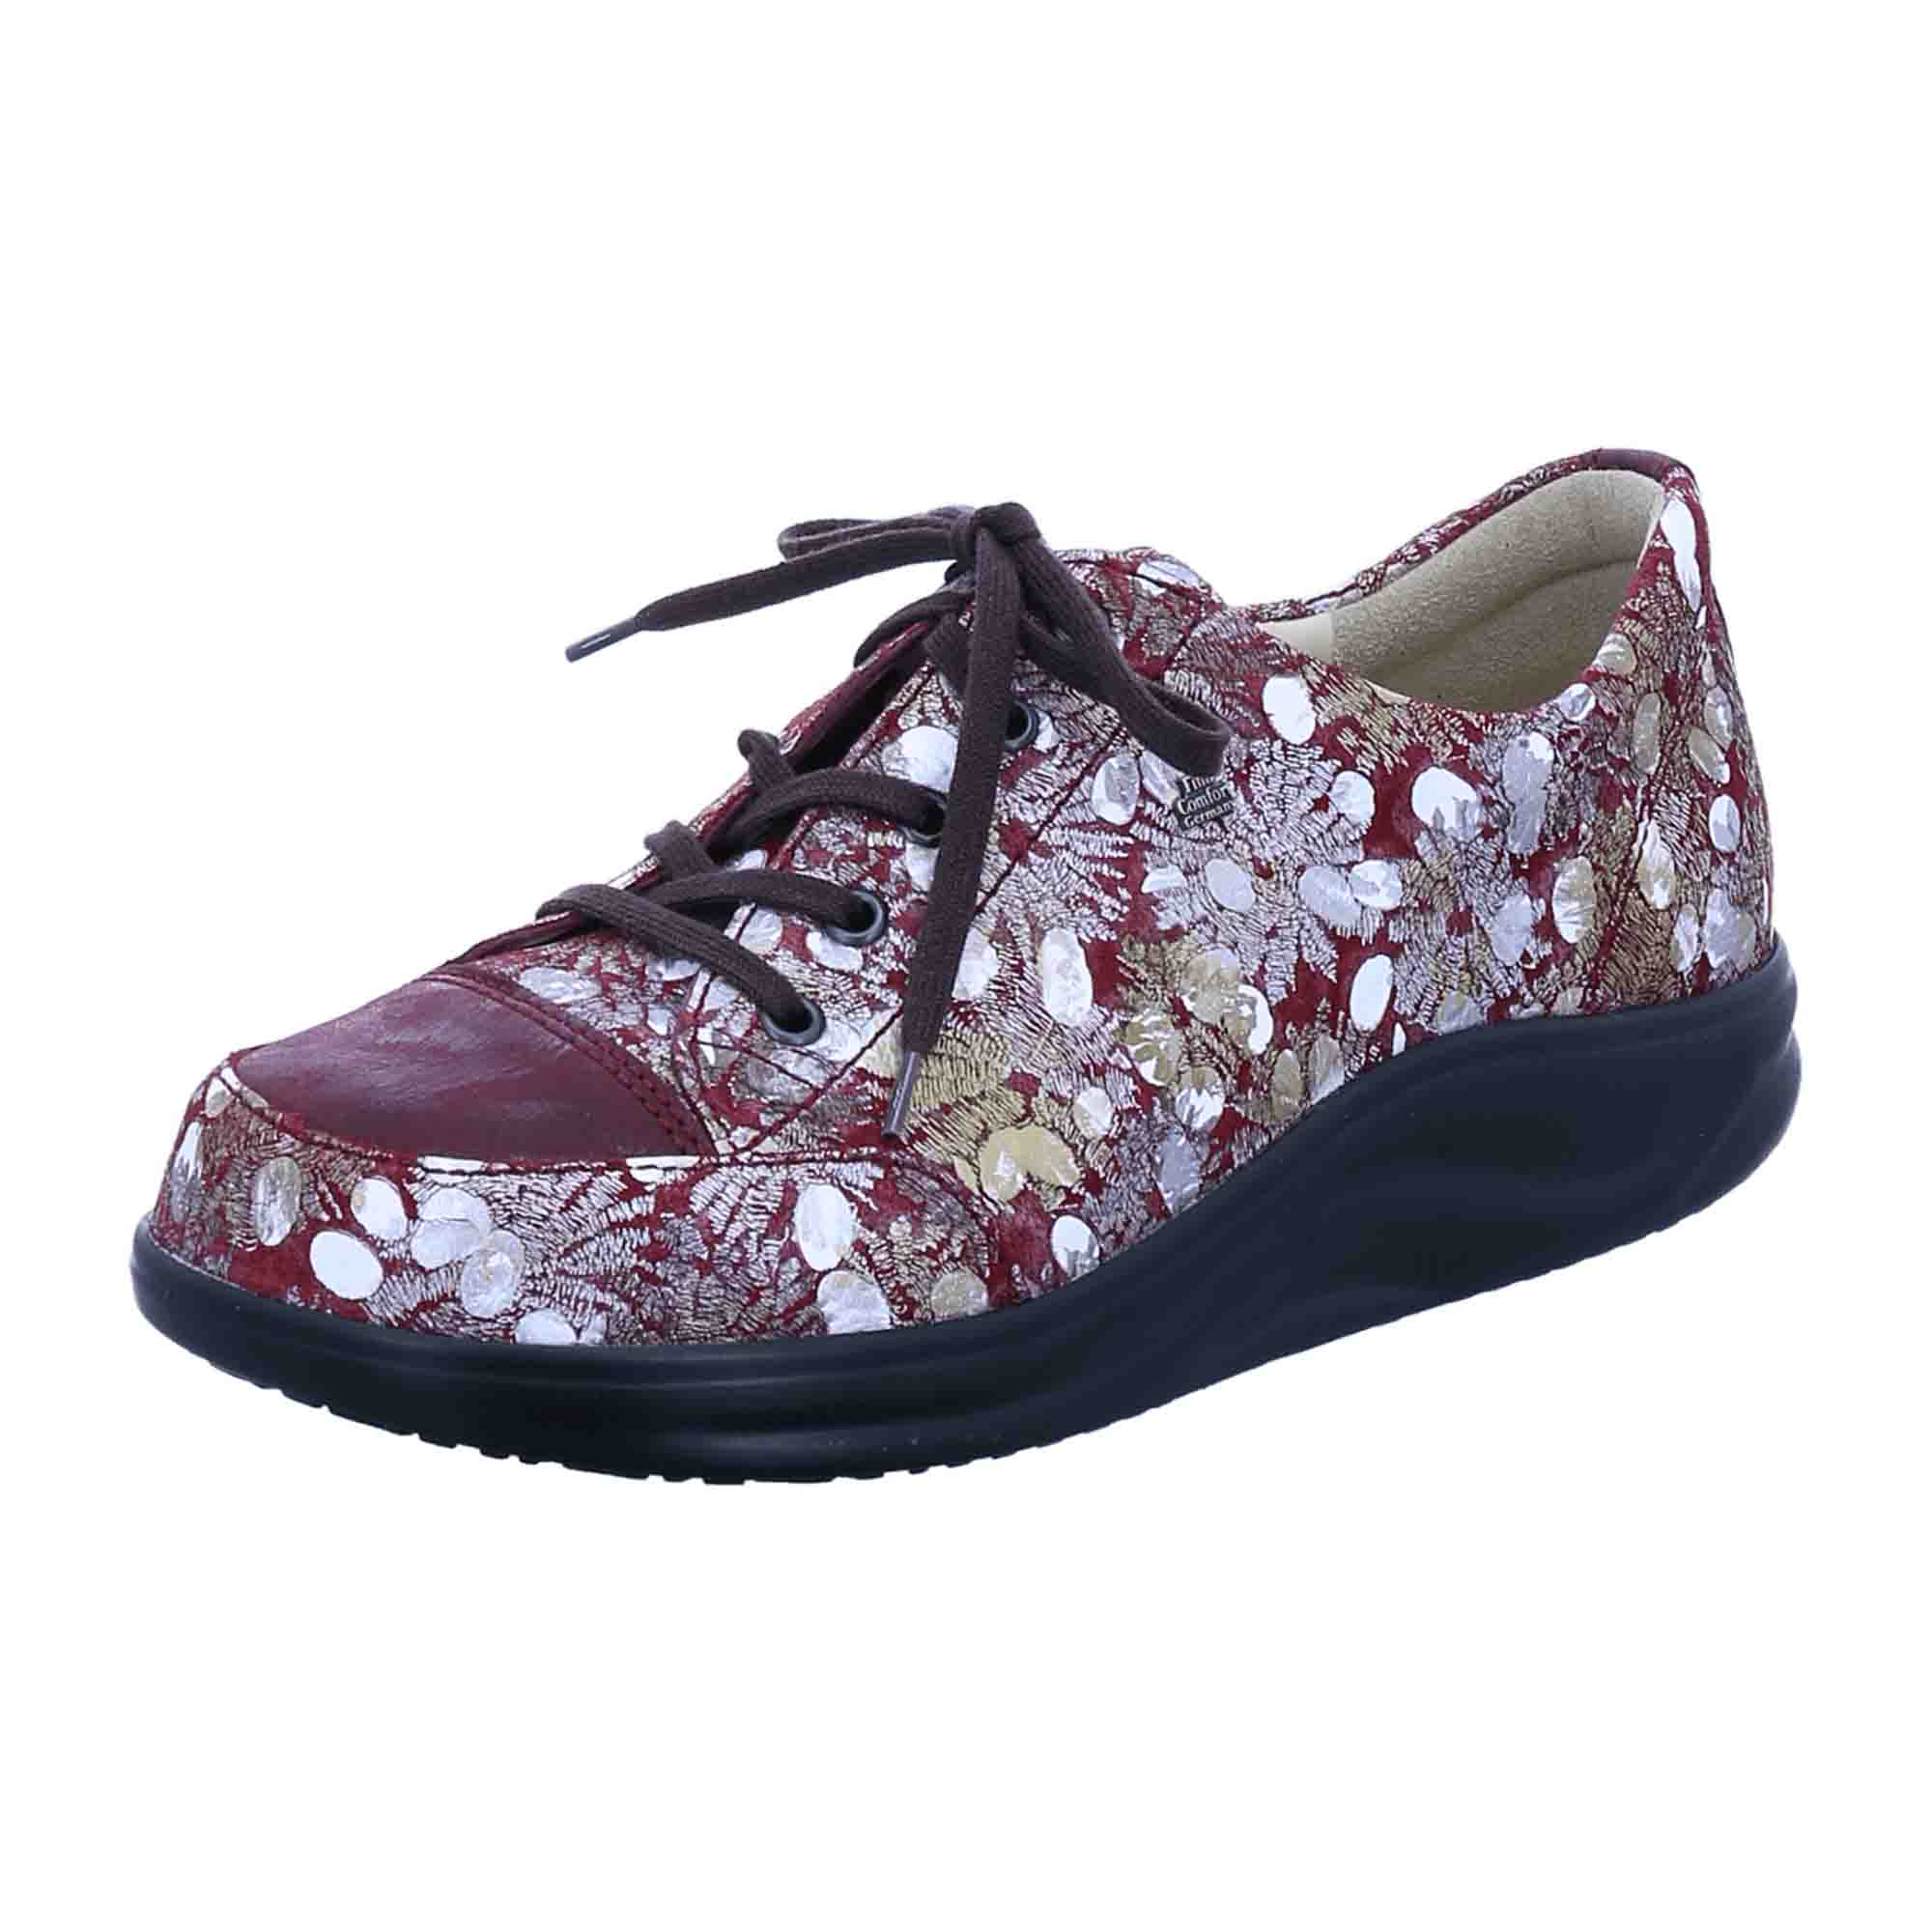 Finn Comfort Ikebukuro Women's Shoes - Vibrant Berry/Bordo Color Mix, Stylish and Comfortable